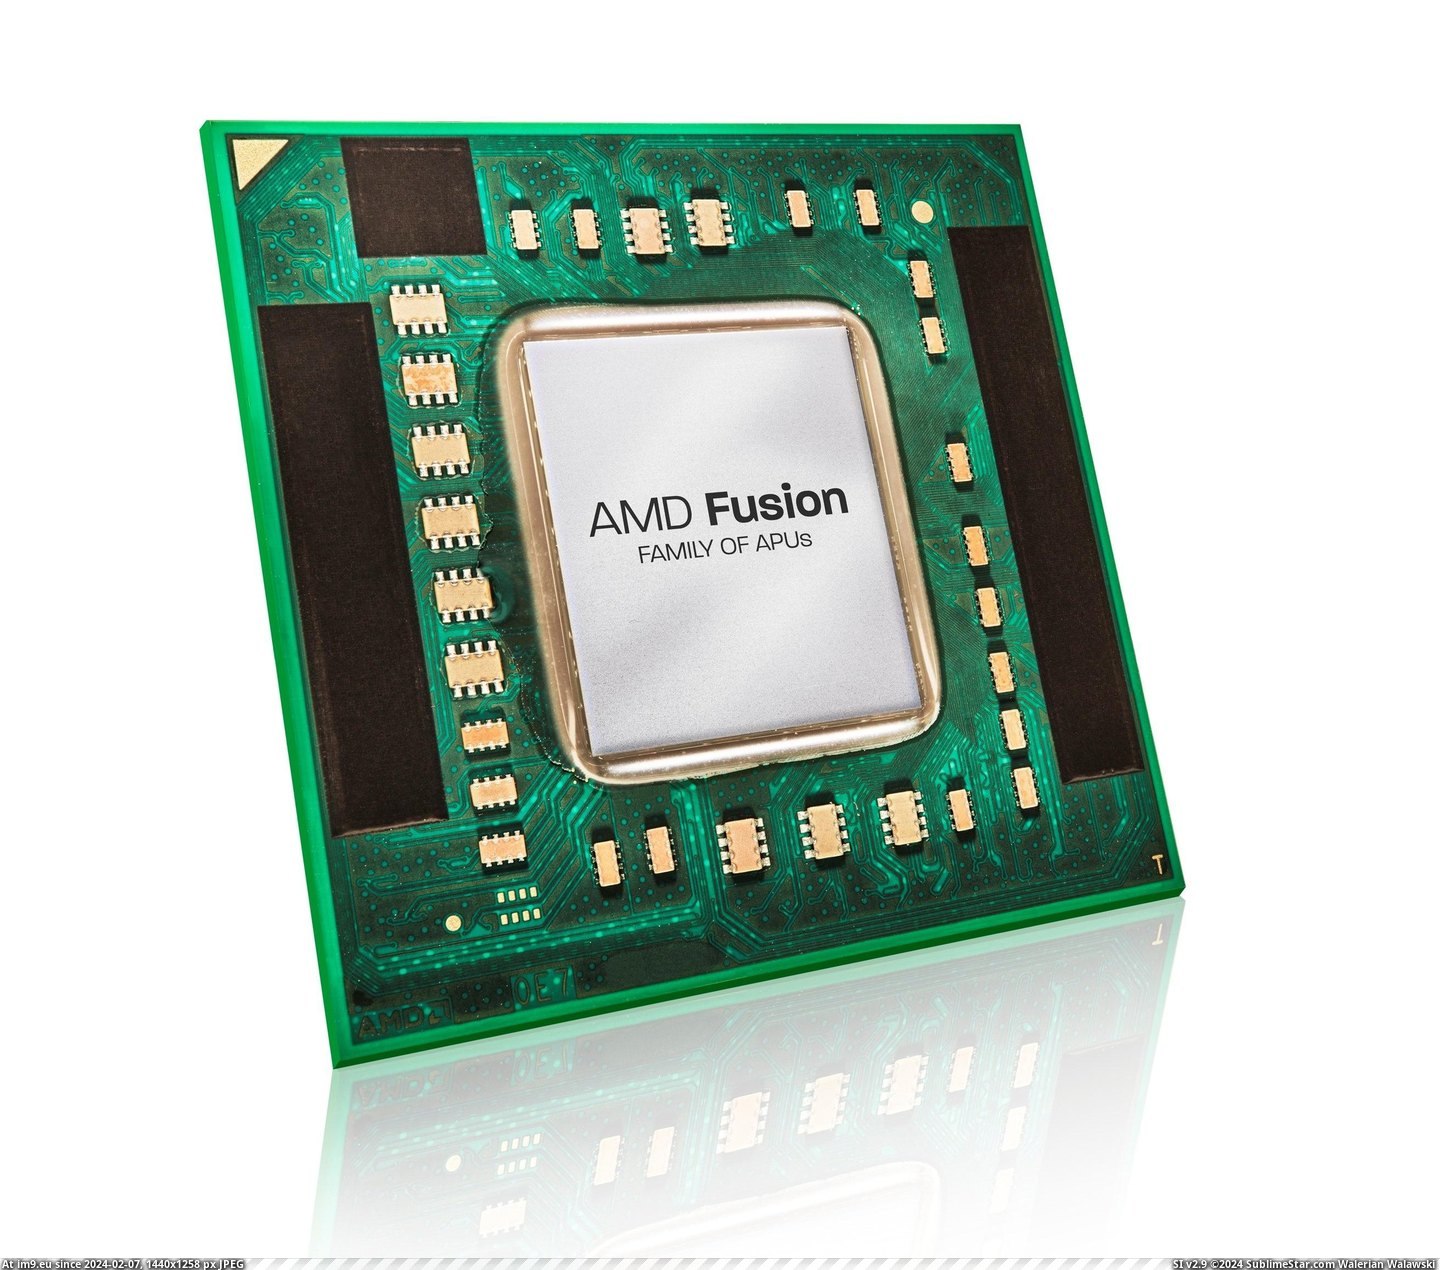 #Fusion #Apu #Amd AMD Fusion APU Pic. (Image of album Rehost))